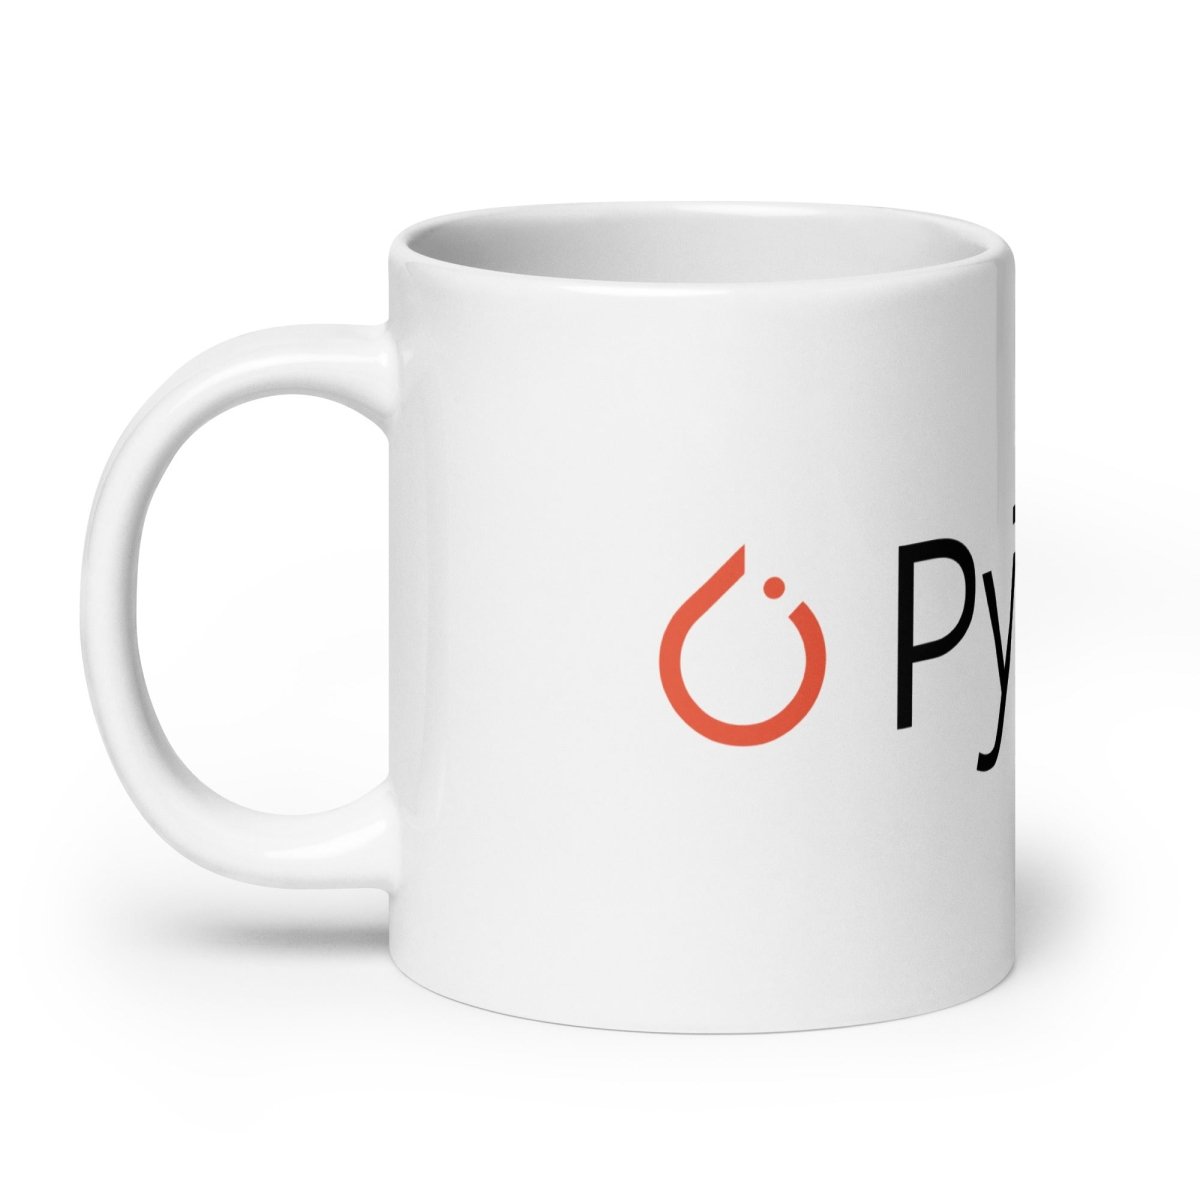 PyTorch Logo on White Glossy Mug - 20 oz - AI Store